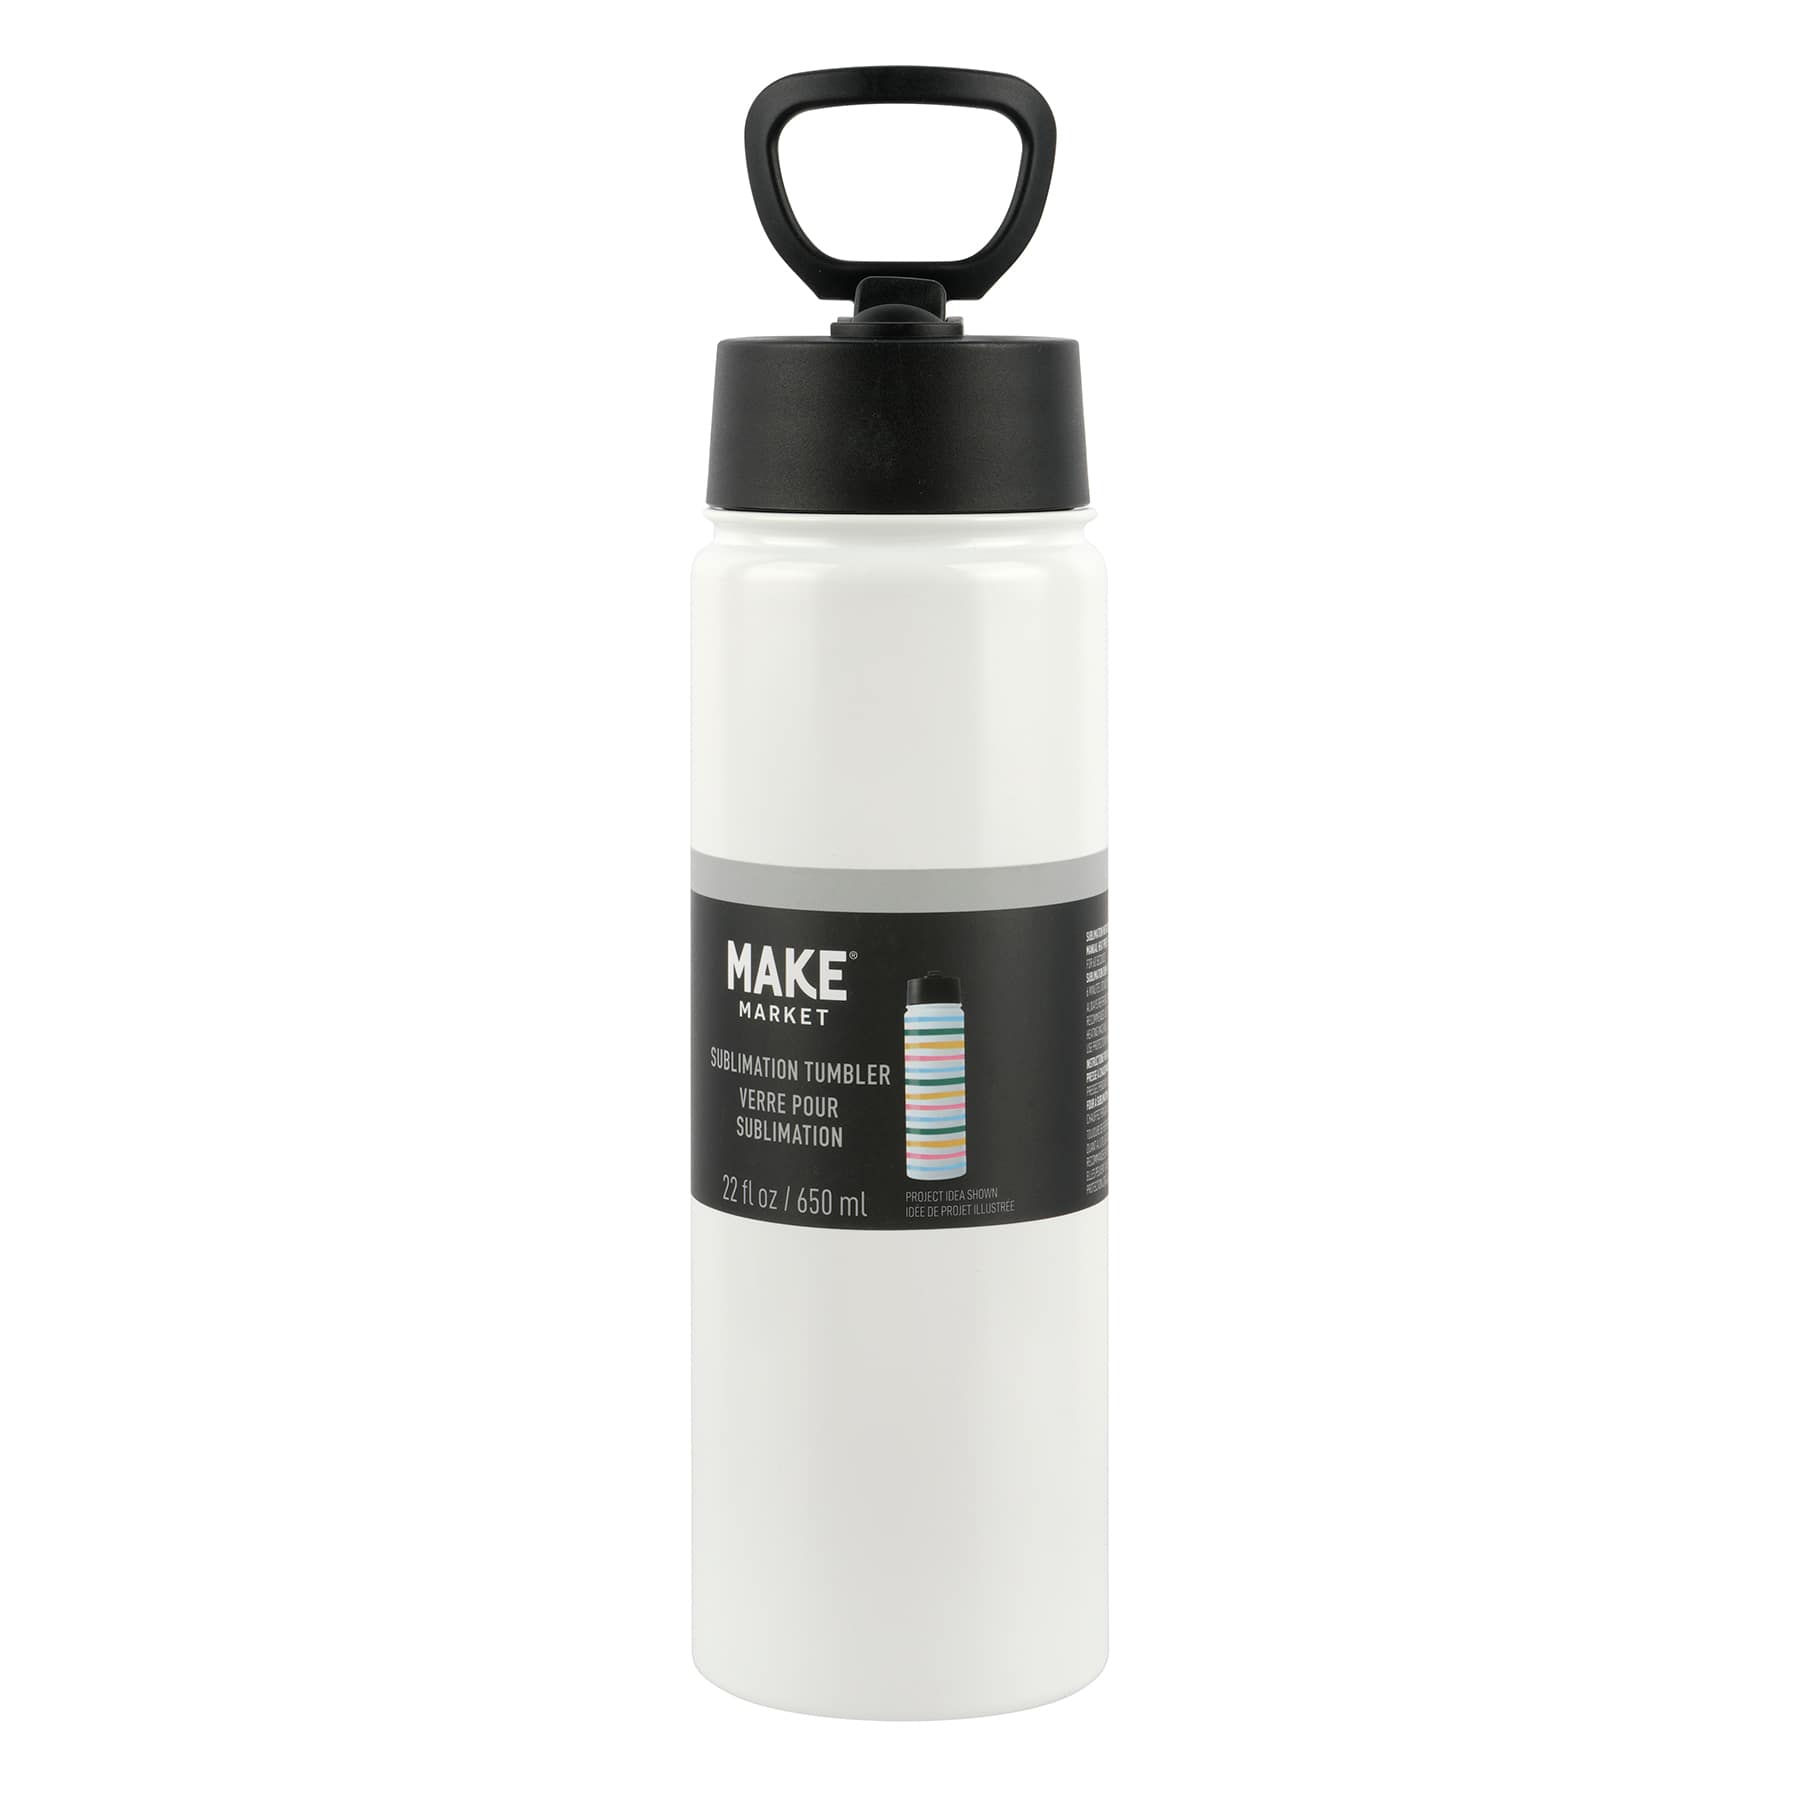 Make Market Stainless Steel Sublimation Water Bottle - White - 22 oz